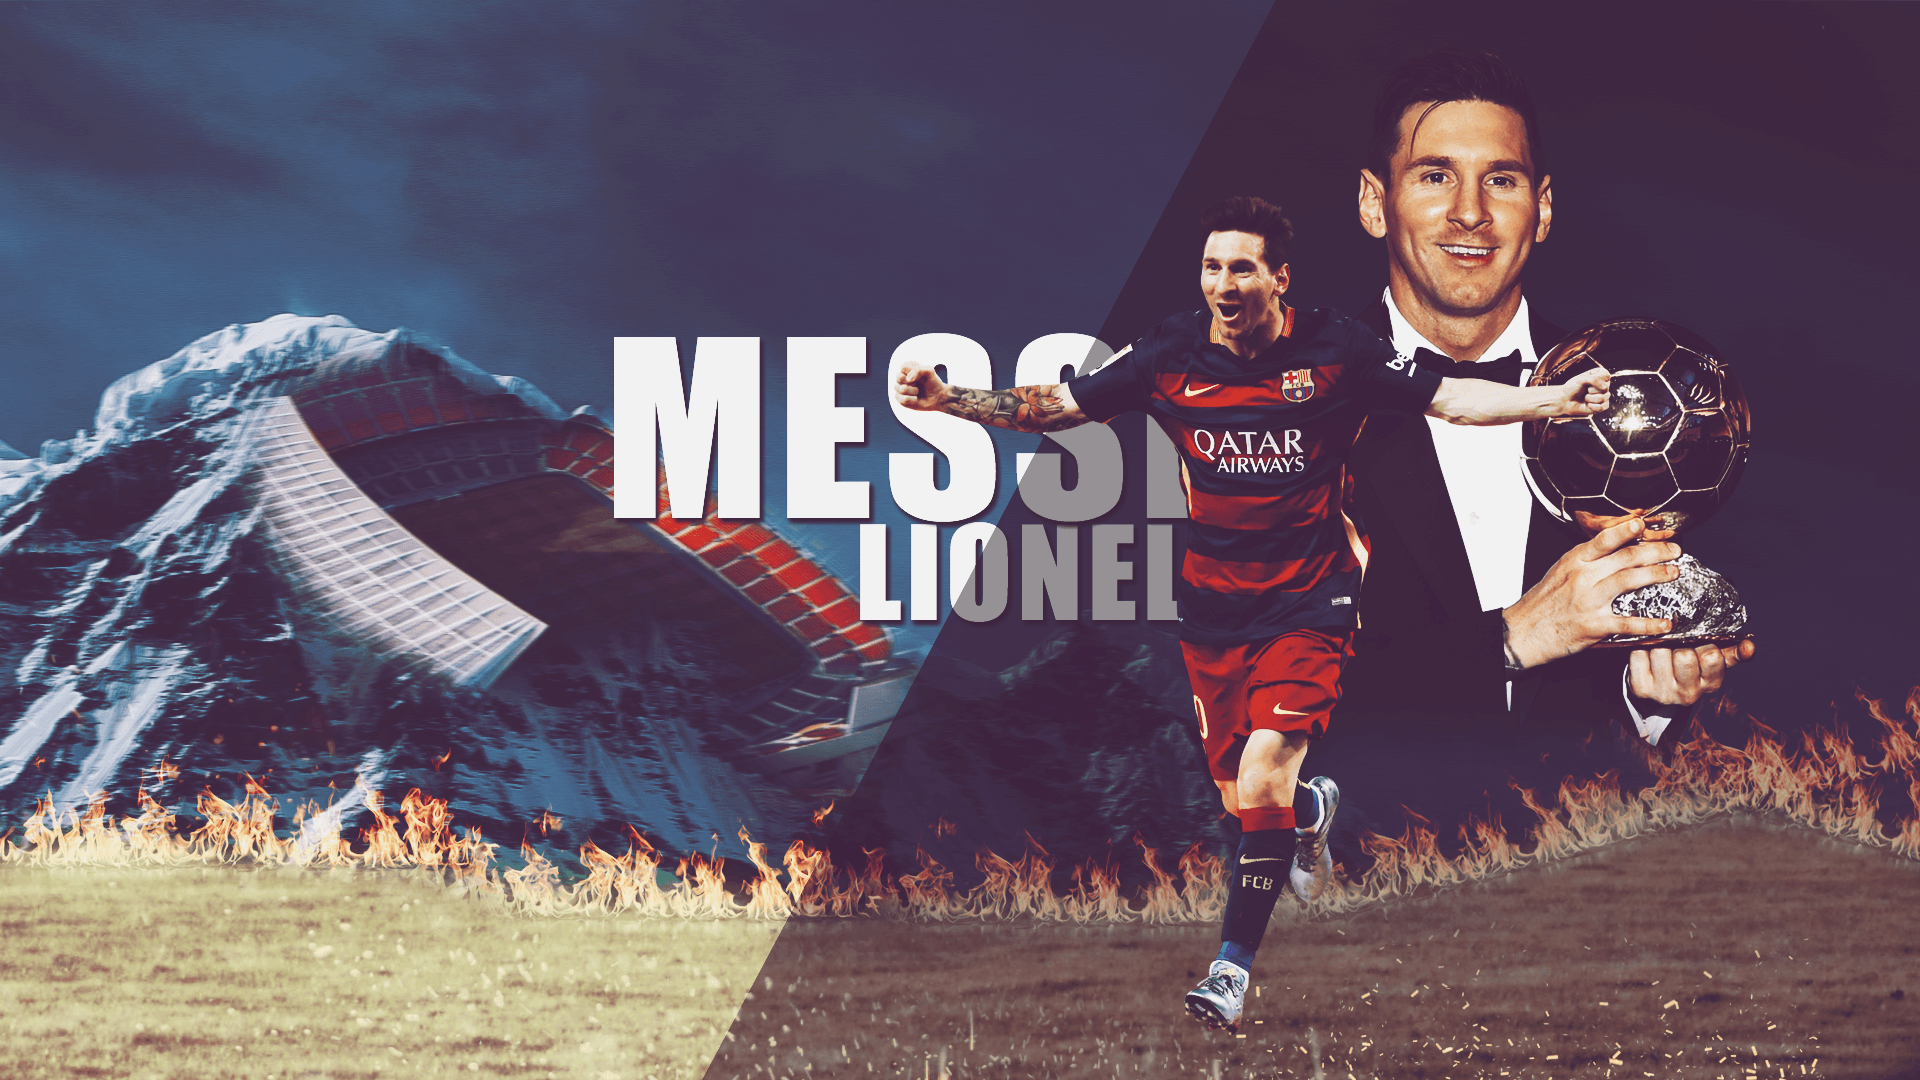 Lionel Messi 2016 Balon D Or Winner Wallpaper Wallpaper